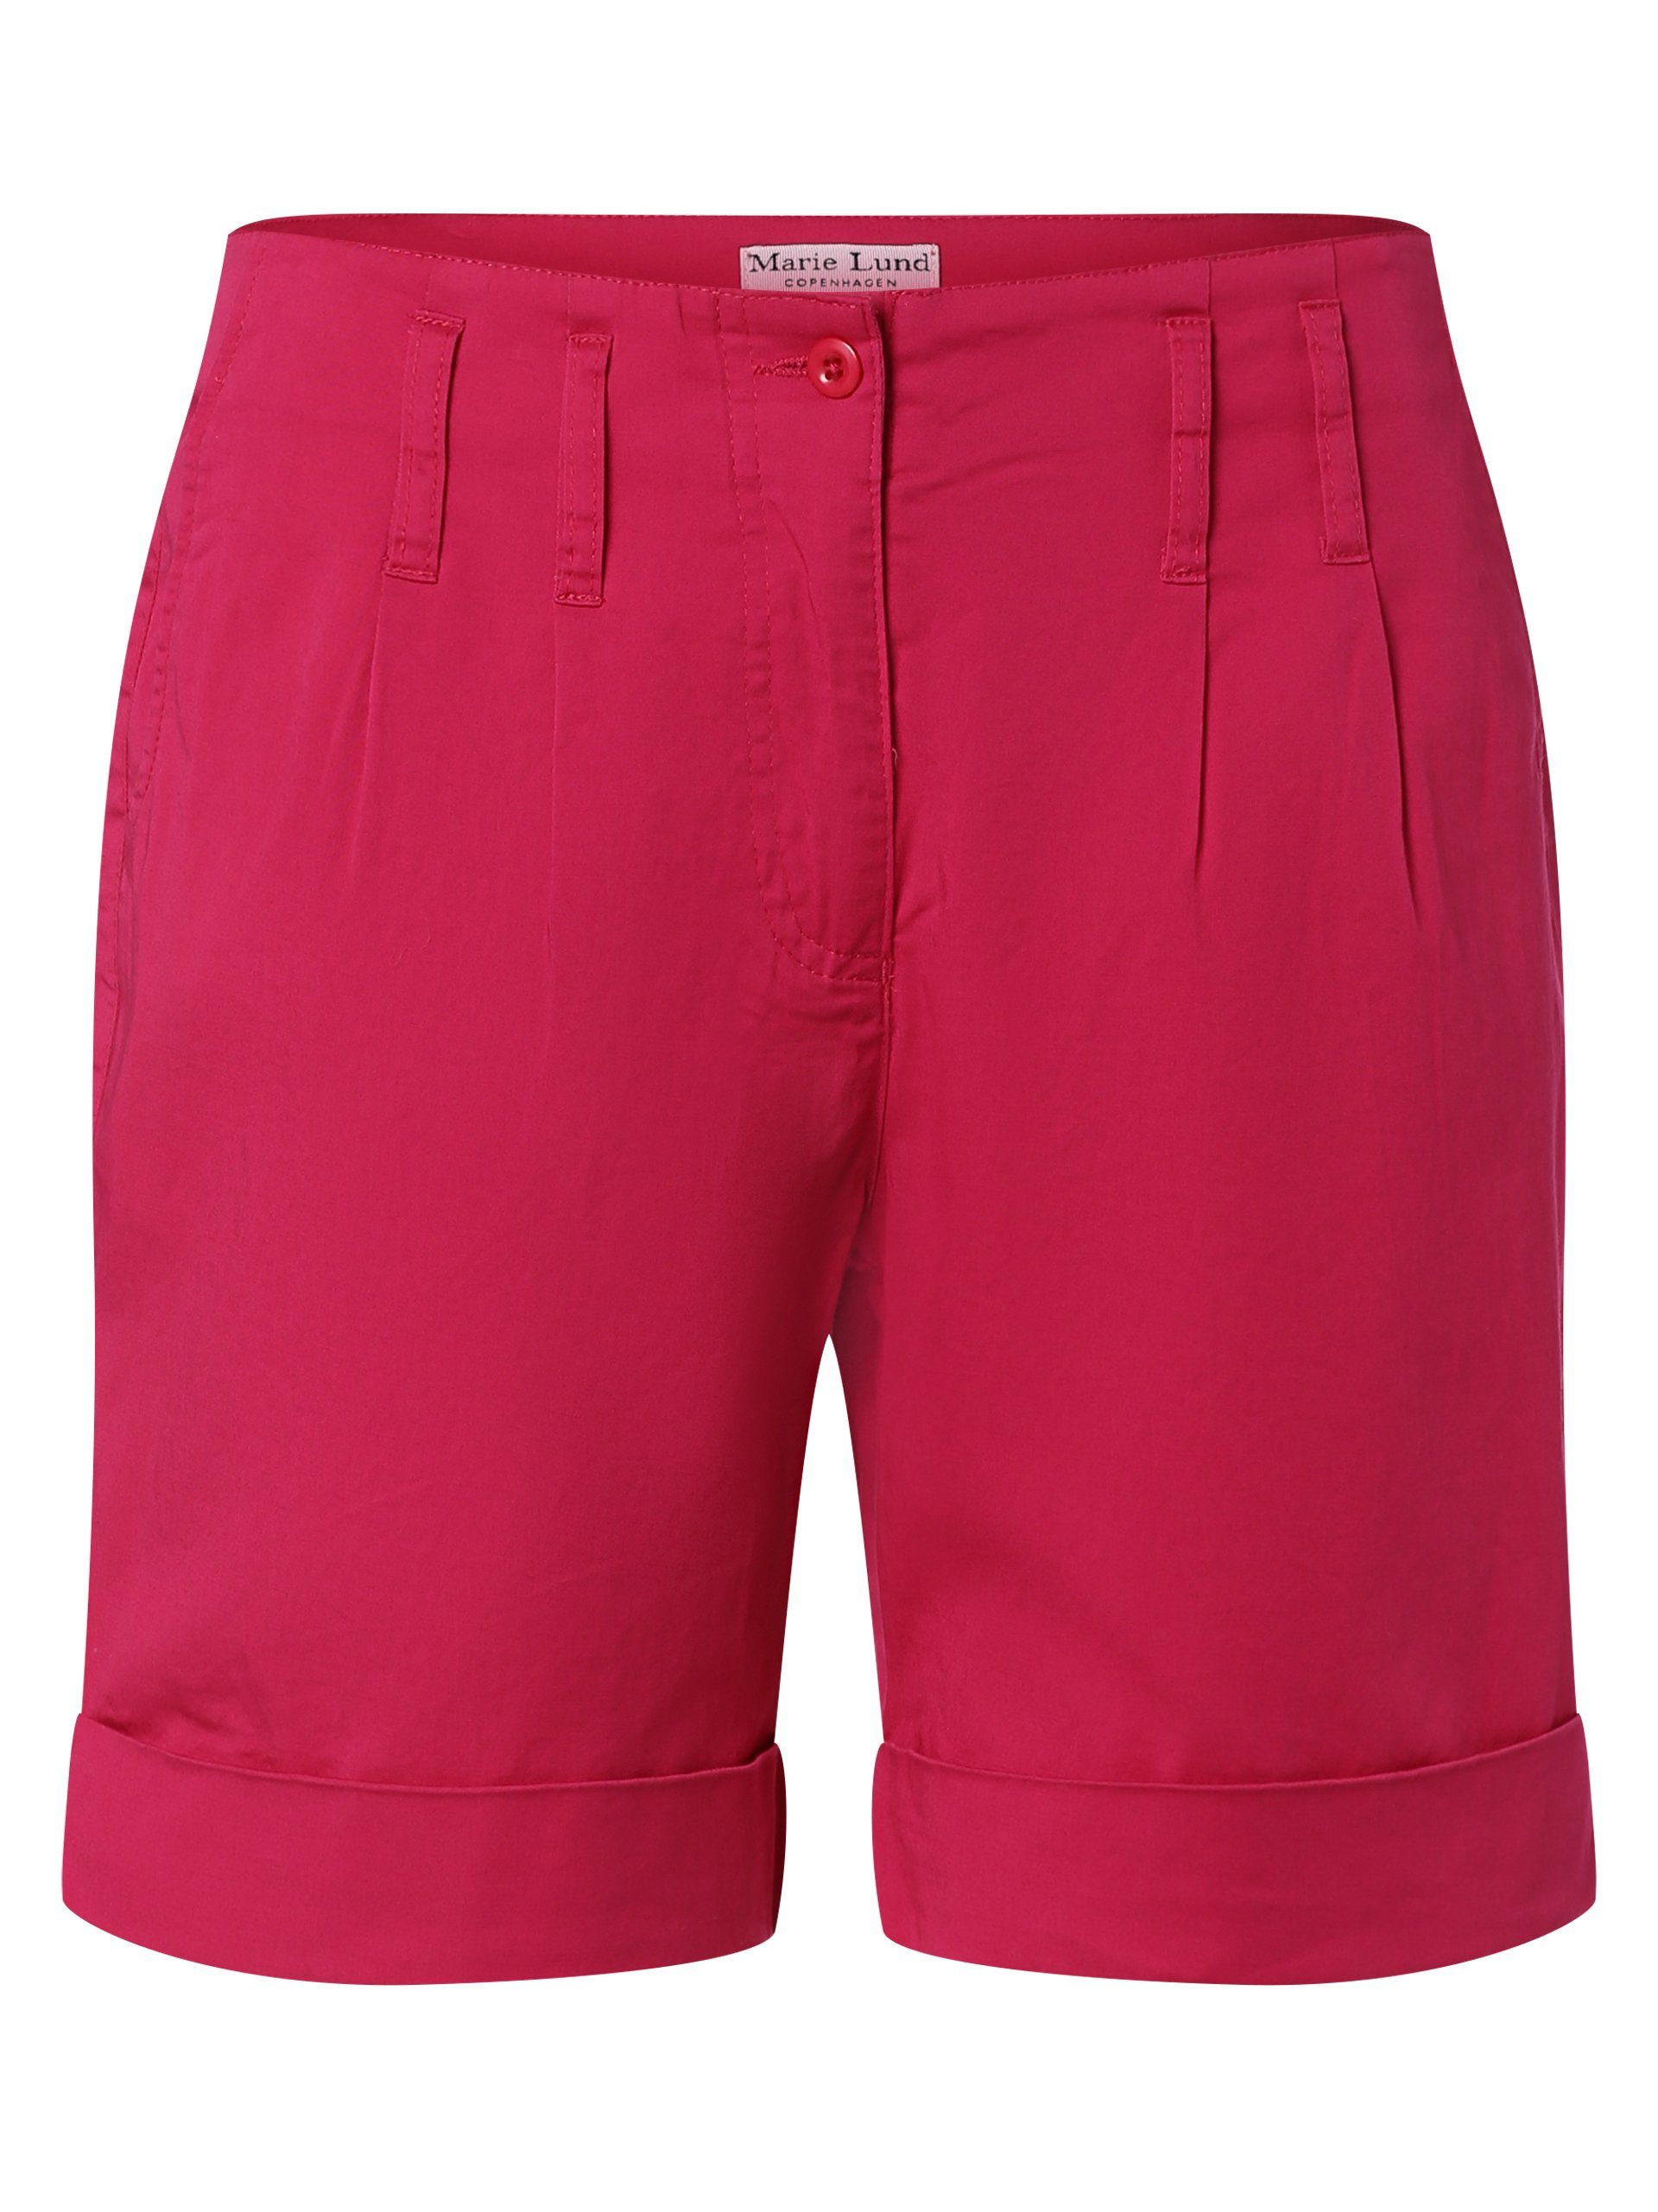 Marie Lund Shorts pink